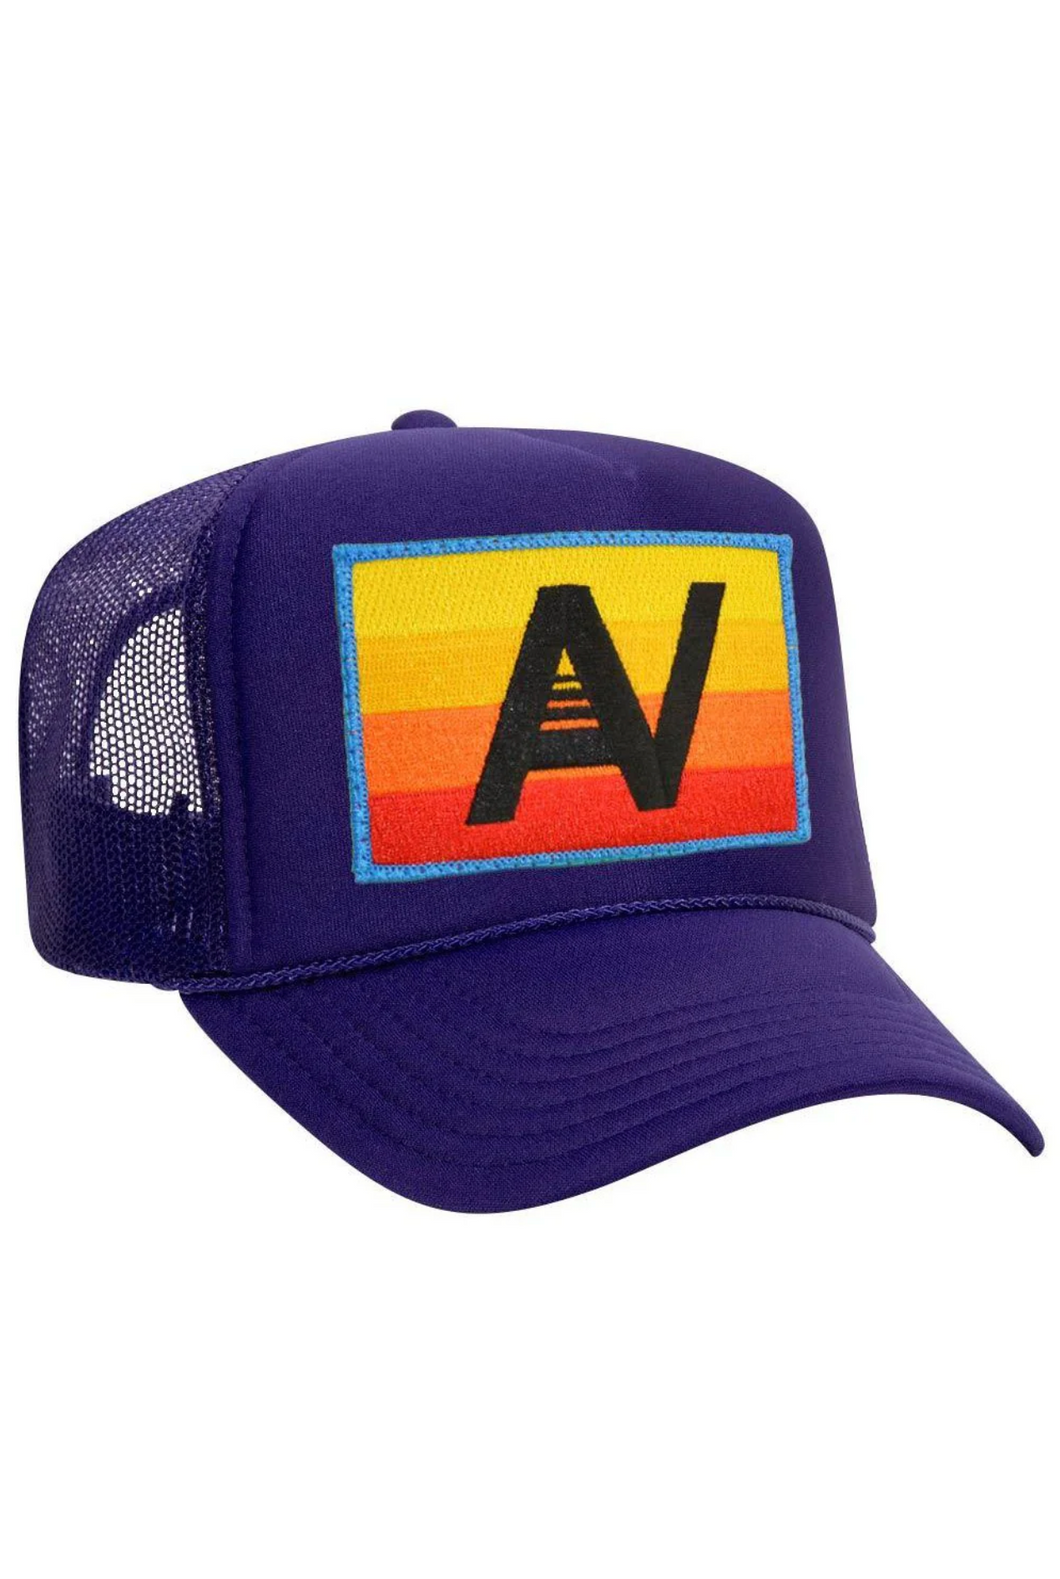 Aviator Nation Logo Rainbow Vintage Trucker Hat in PURPLE